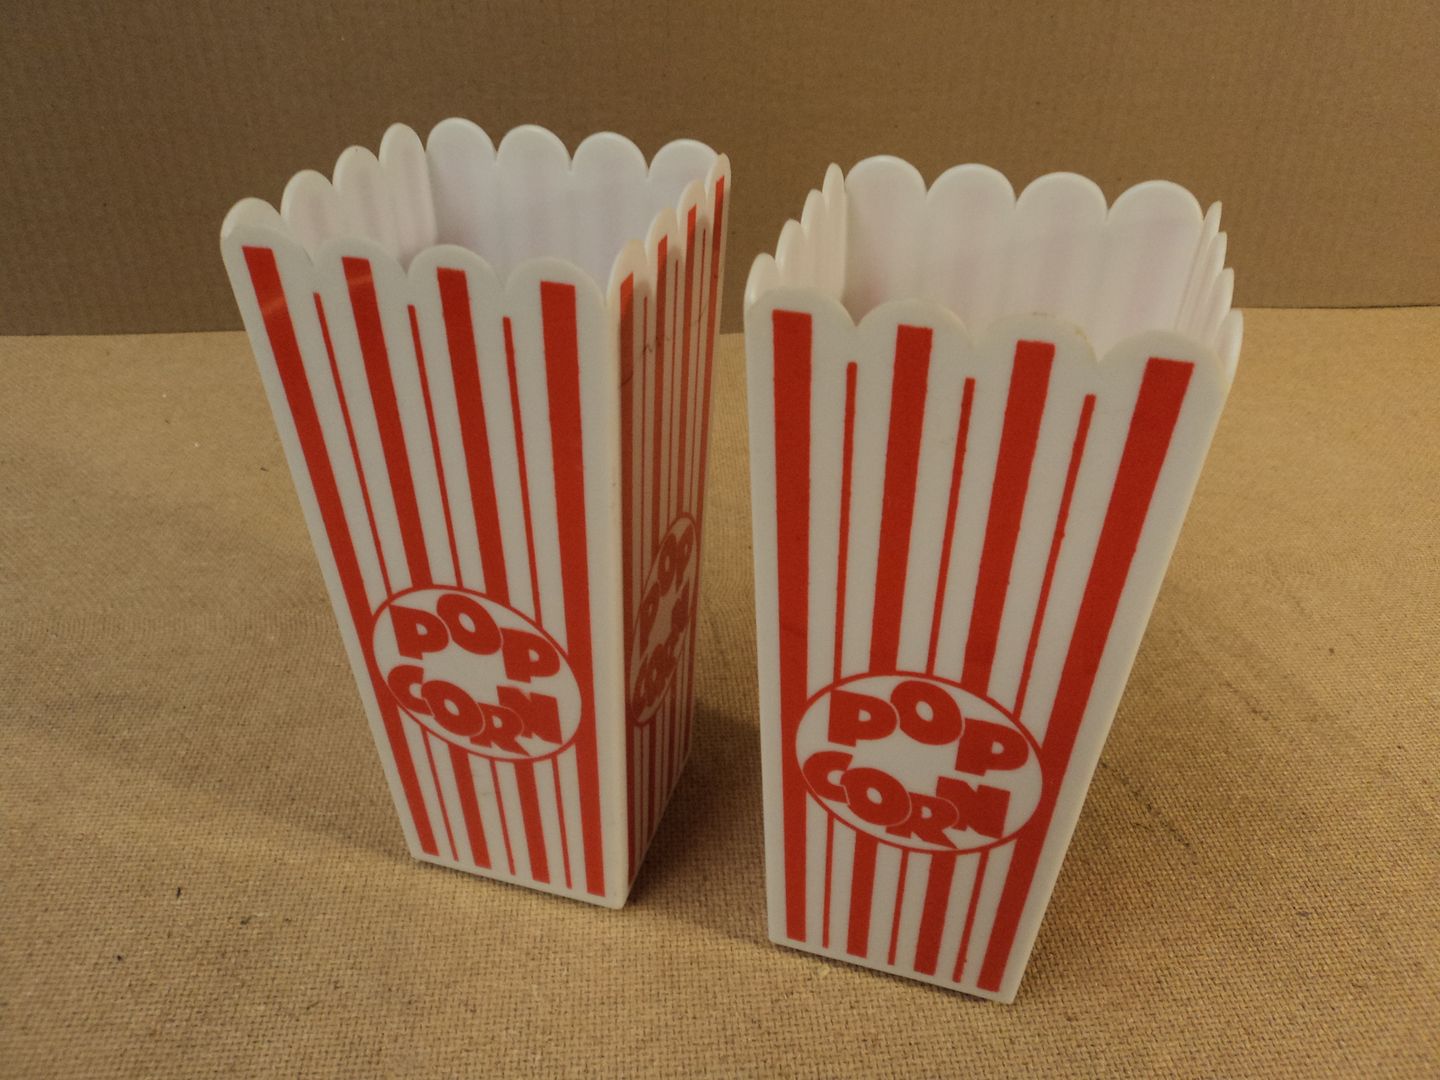 Name Brand Popcorn Holders White Red Set of 2 Plastic